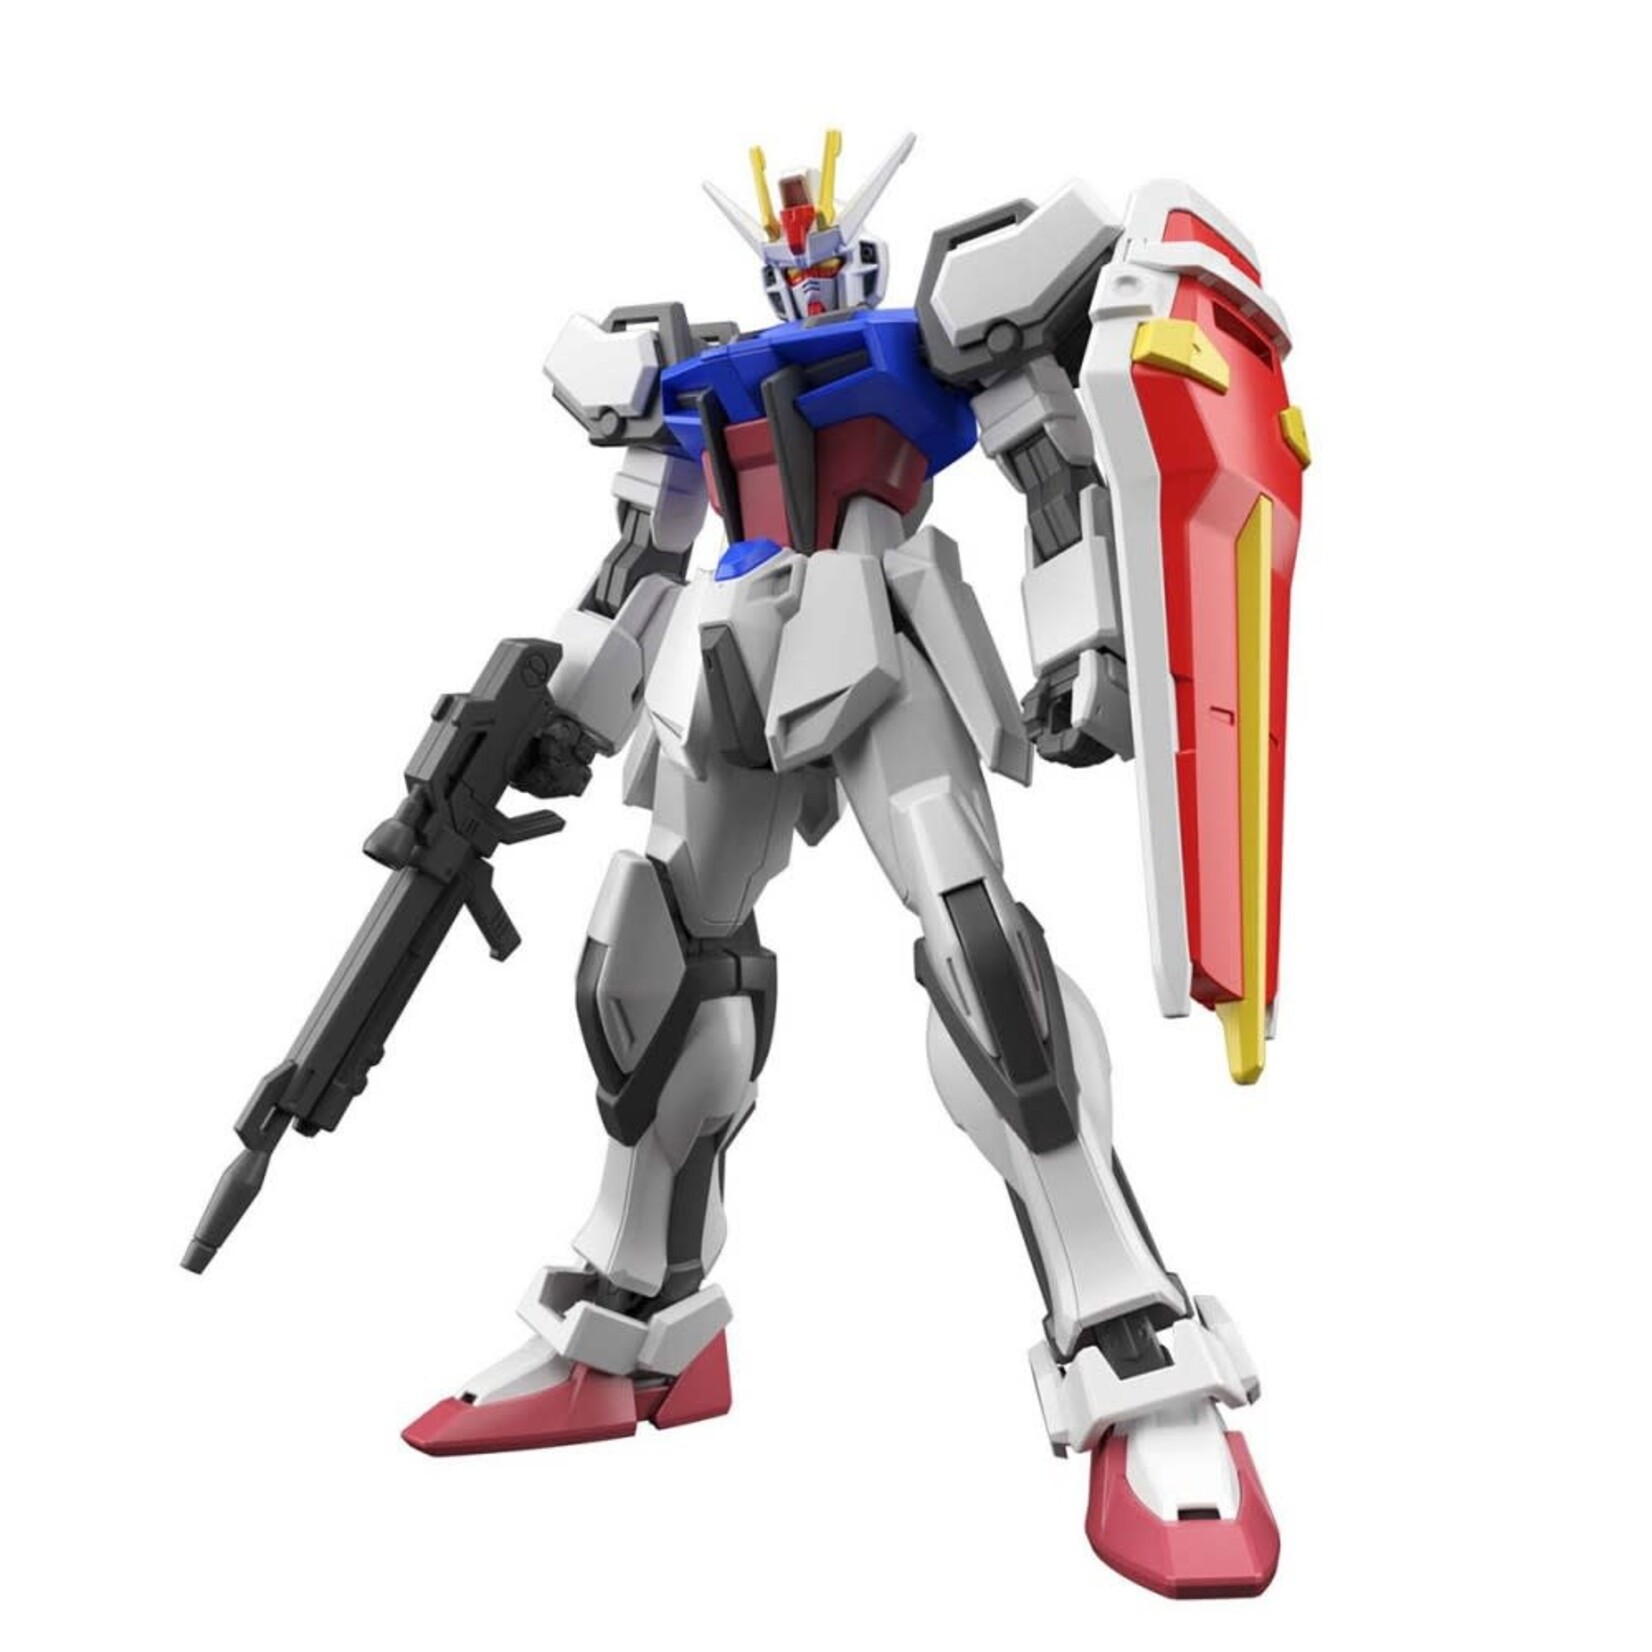 Bandai Bandai 2603390 Entry Grade #10 Strike Gundam SEED